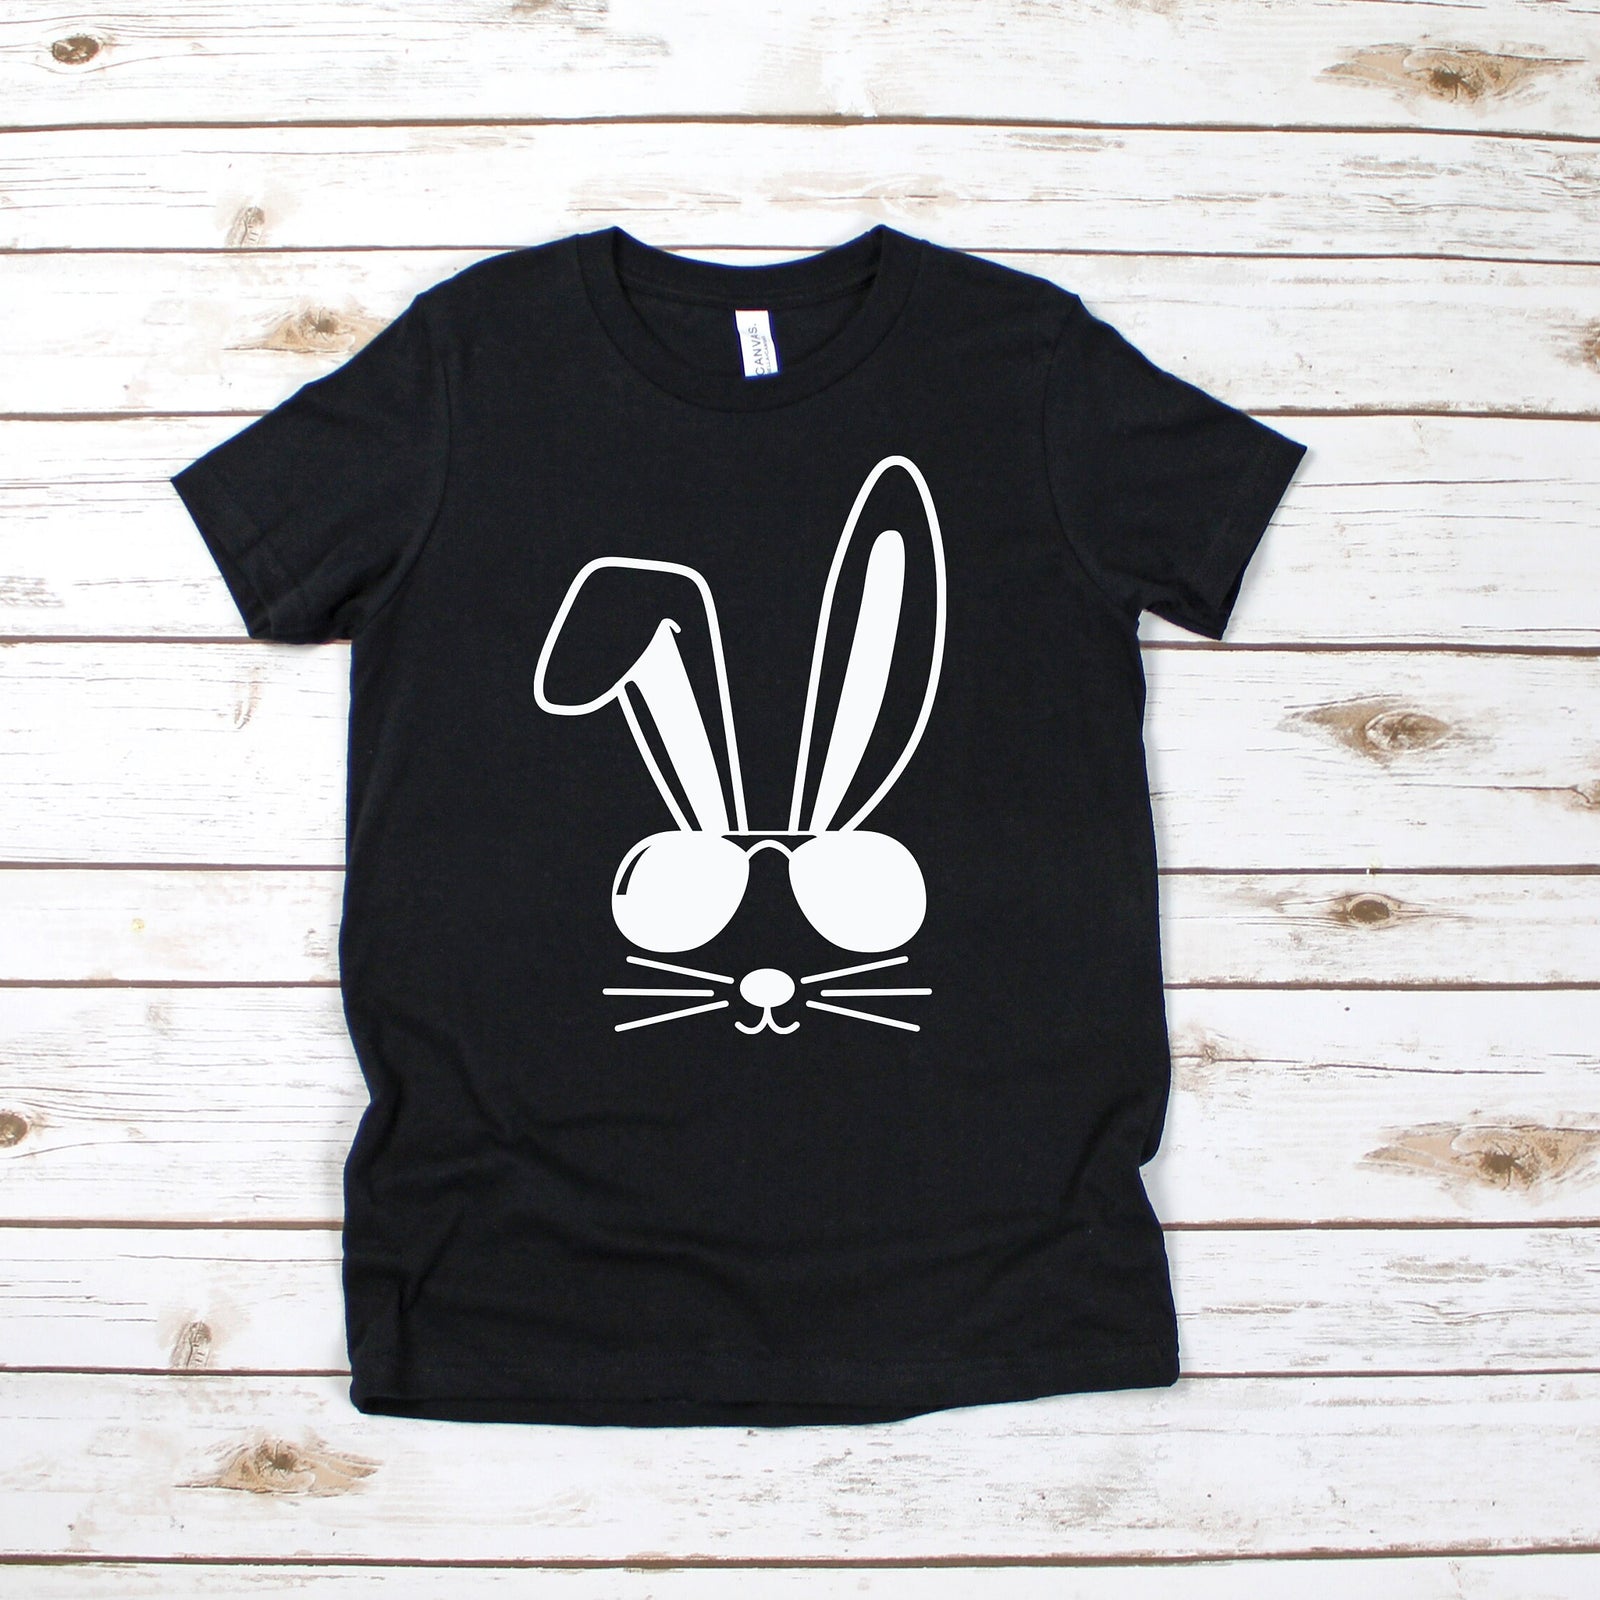 Cute Bunny Shirt - Kids Easter Shirt - Cute Rabbit Shirt - Bunny Face